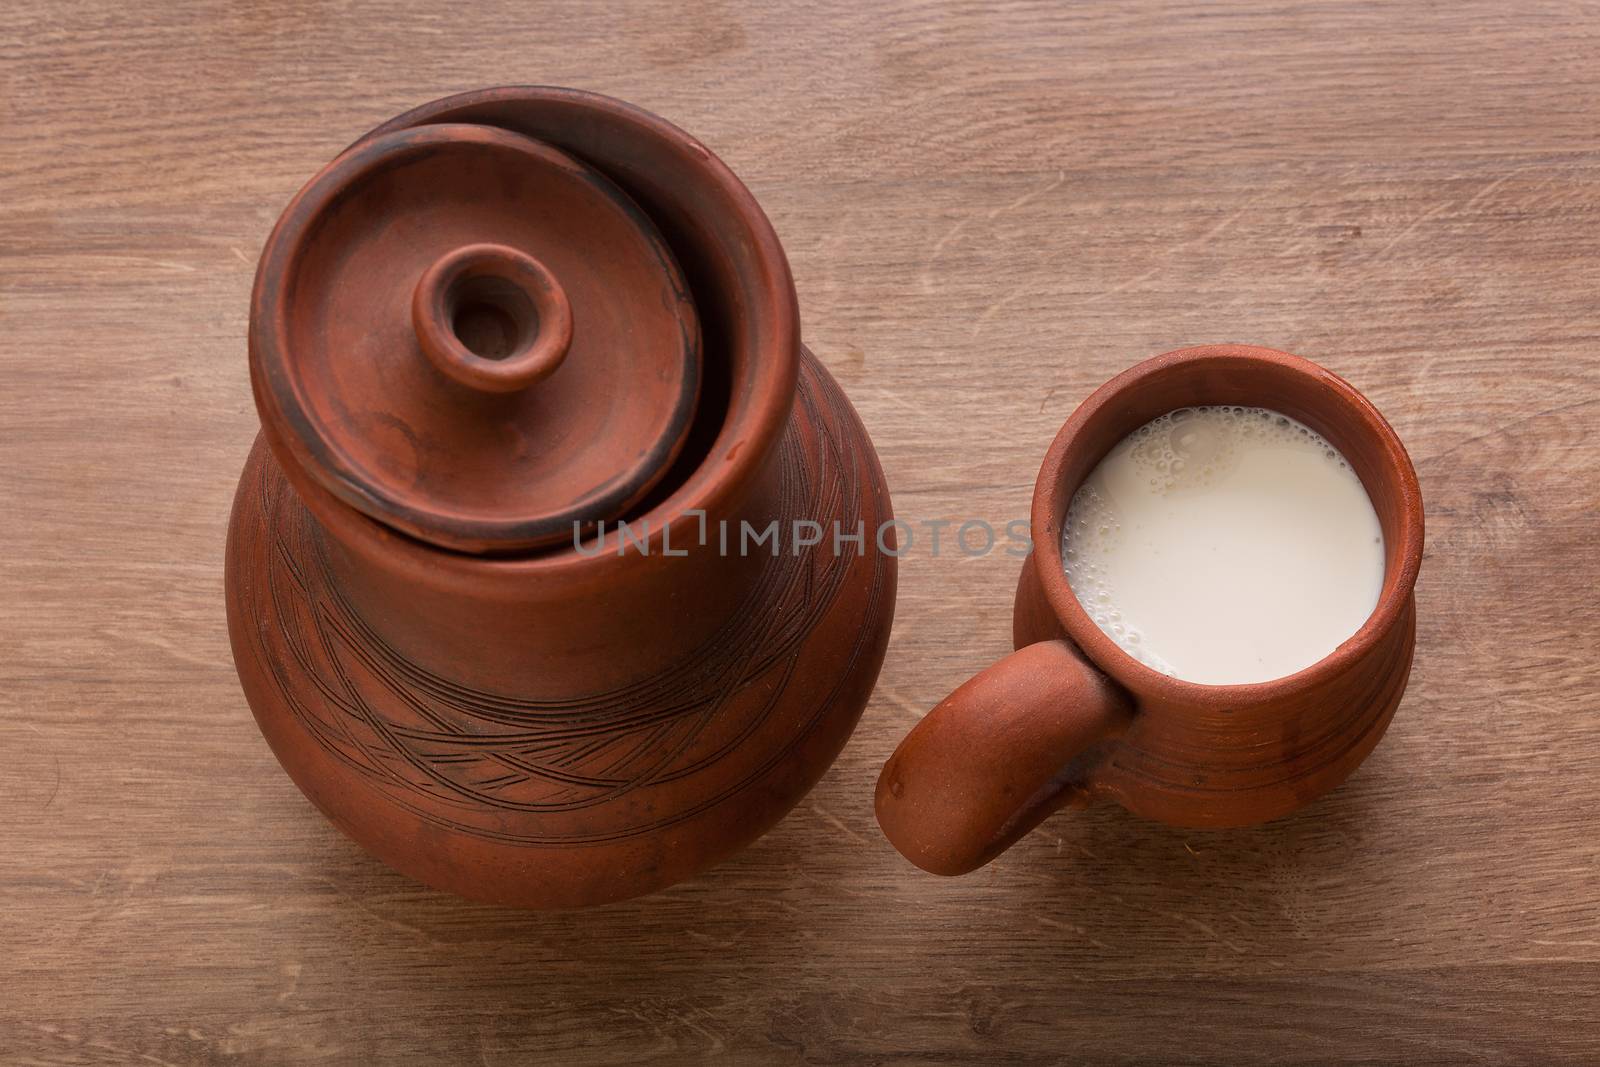 Clay jug and mug with milk by Angorius